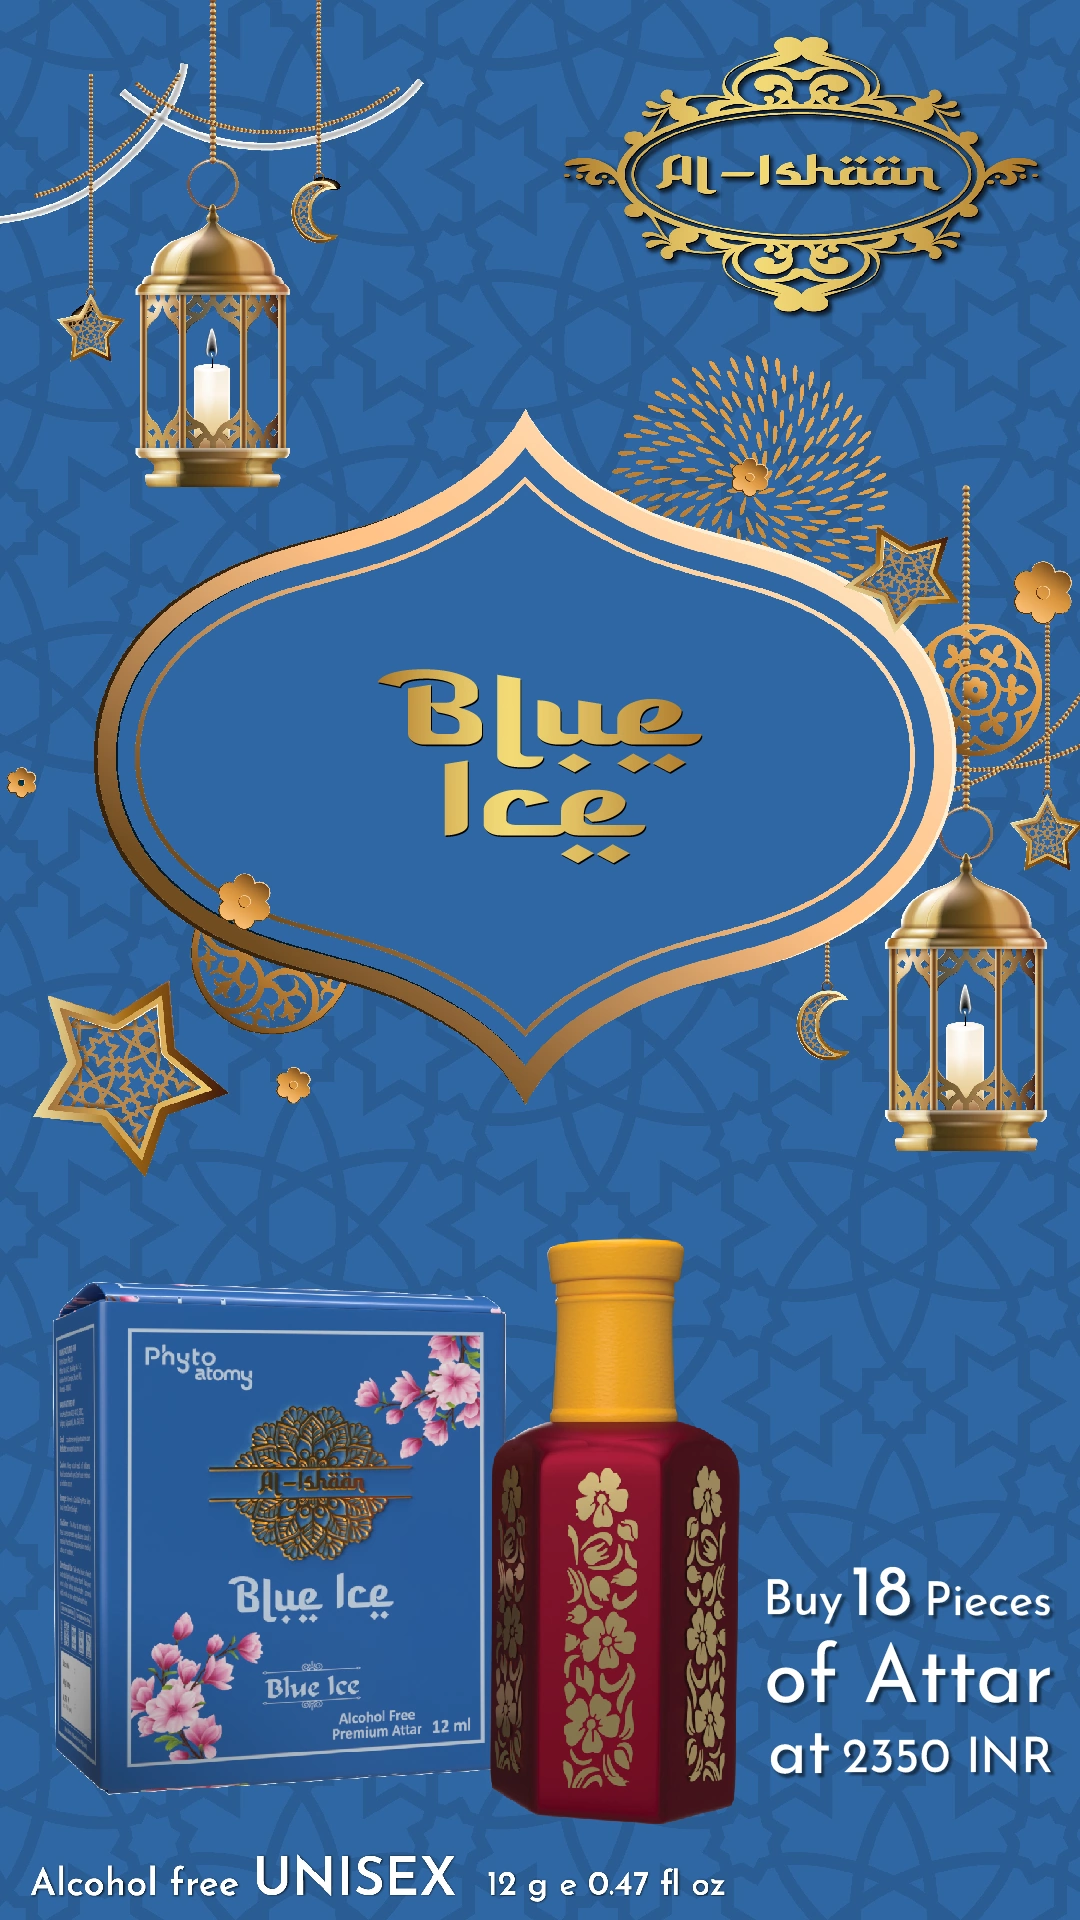 SCBV B2B Al Ishan Blue Ice Attar (12ml)-18 Pcs.